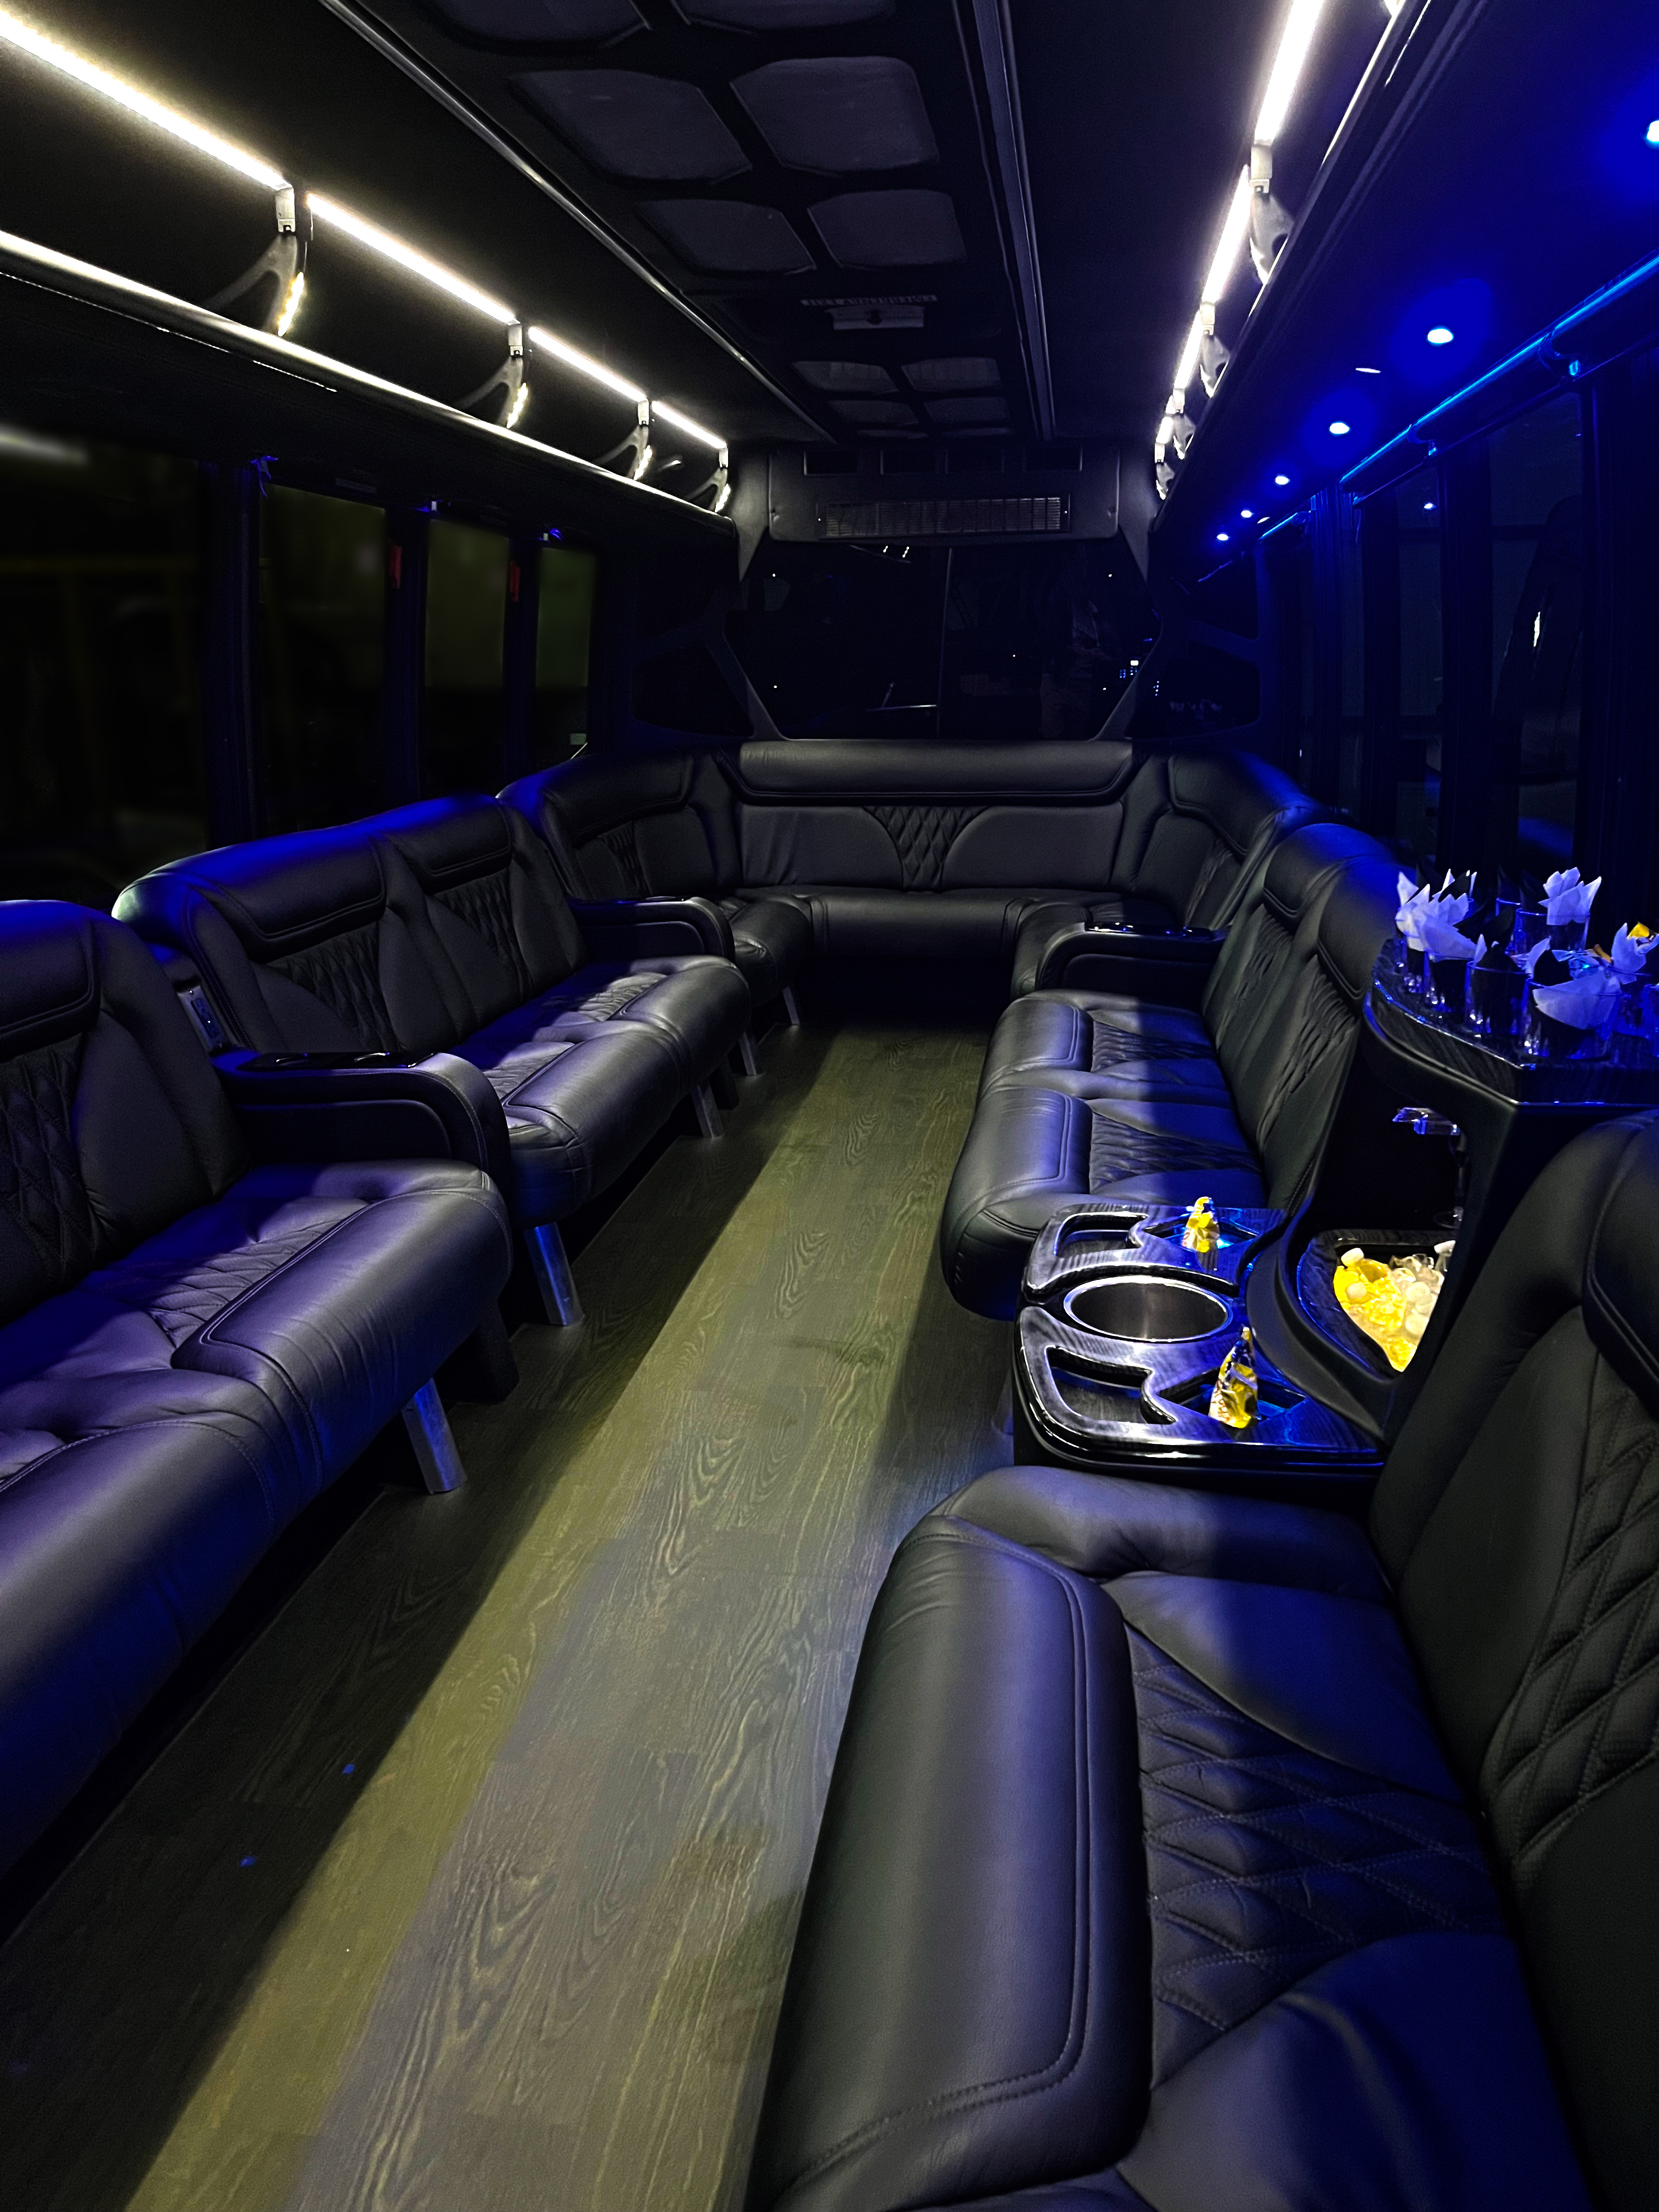 716 Limousine Fleet - 26 pax luxury limousine buses